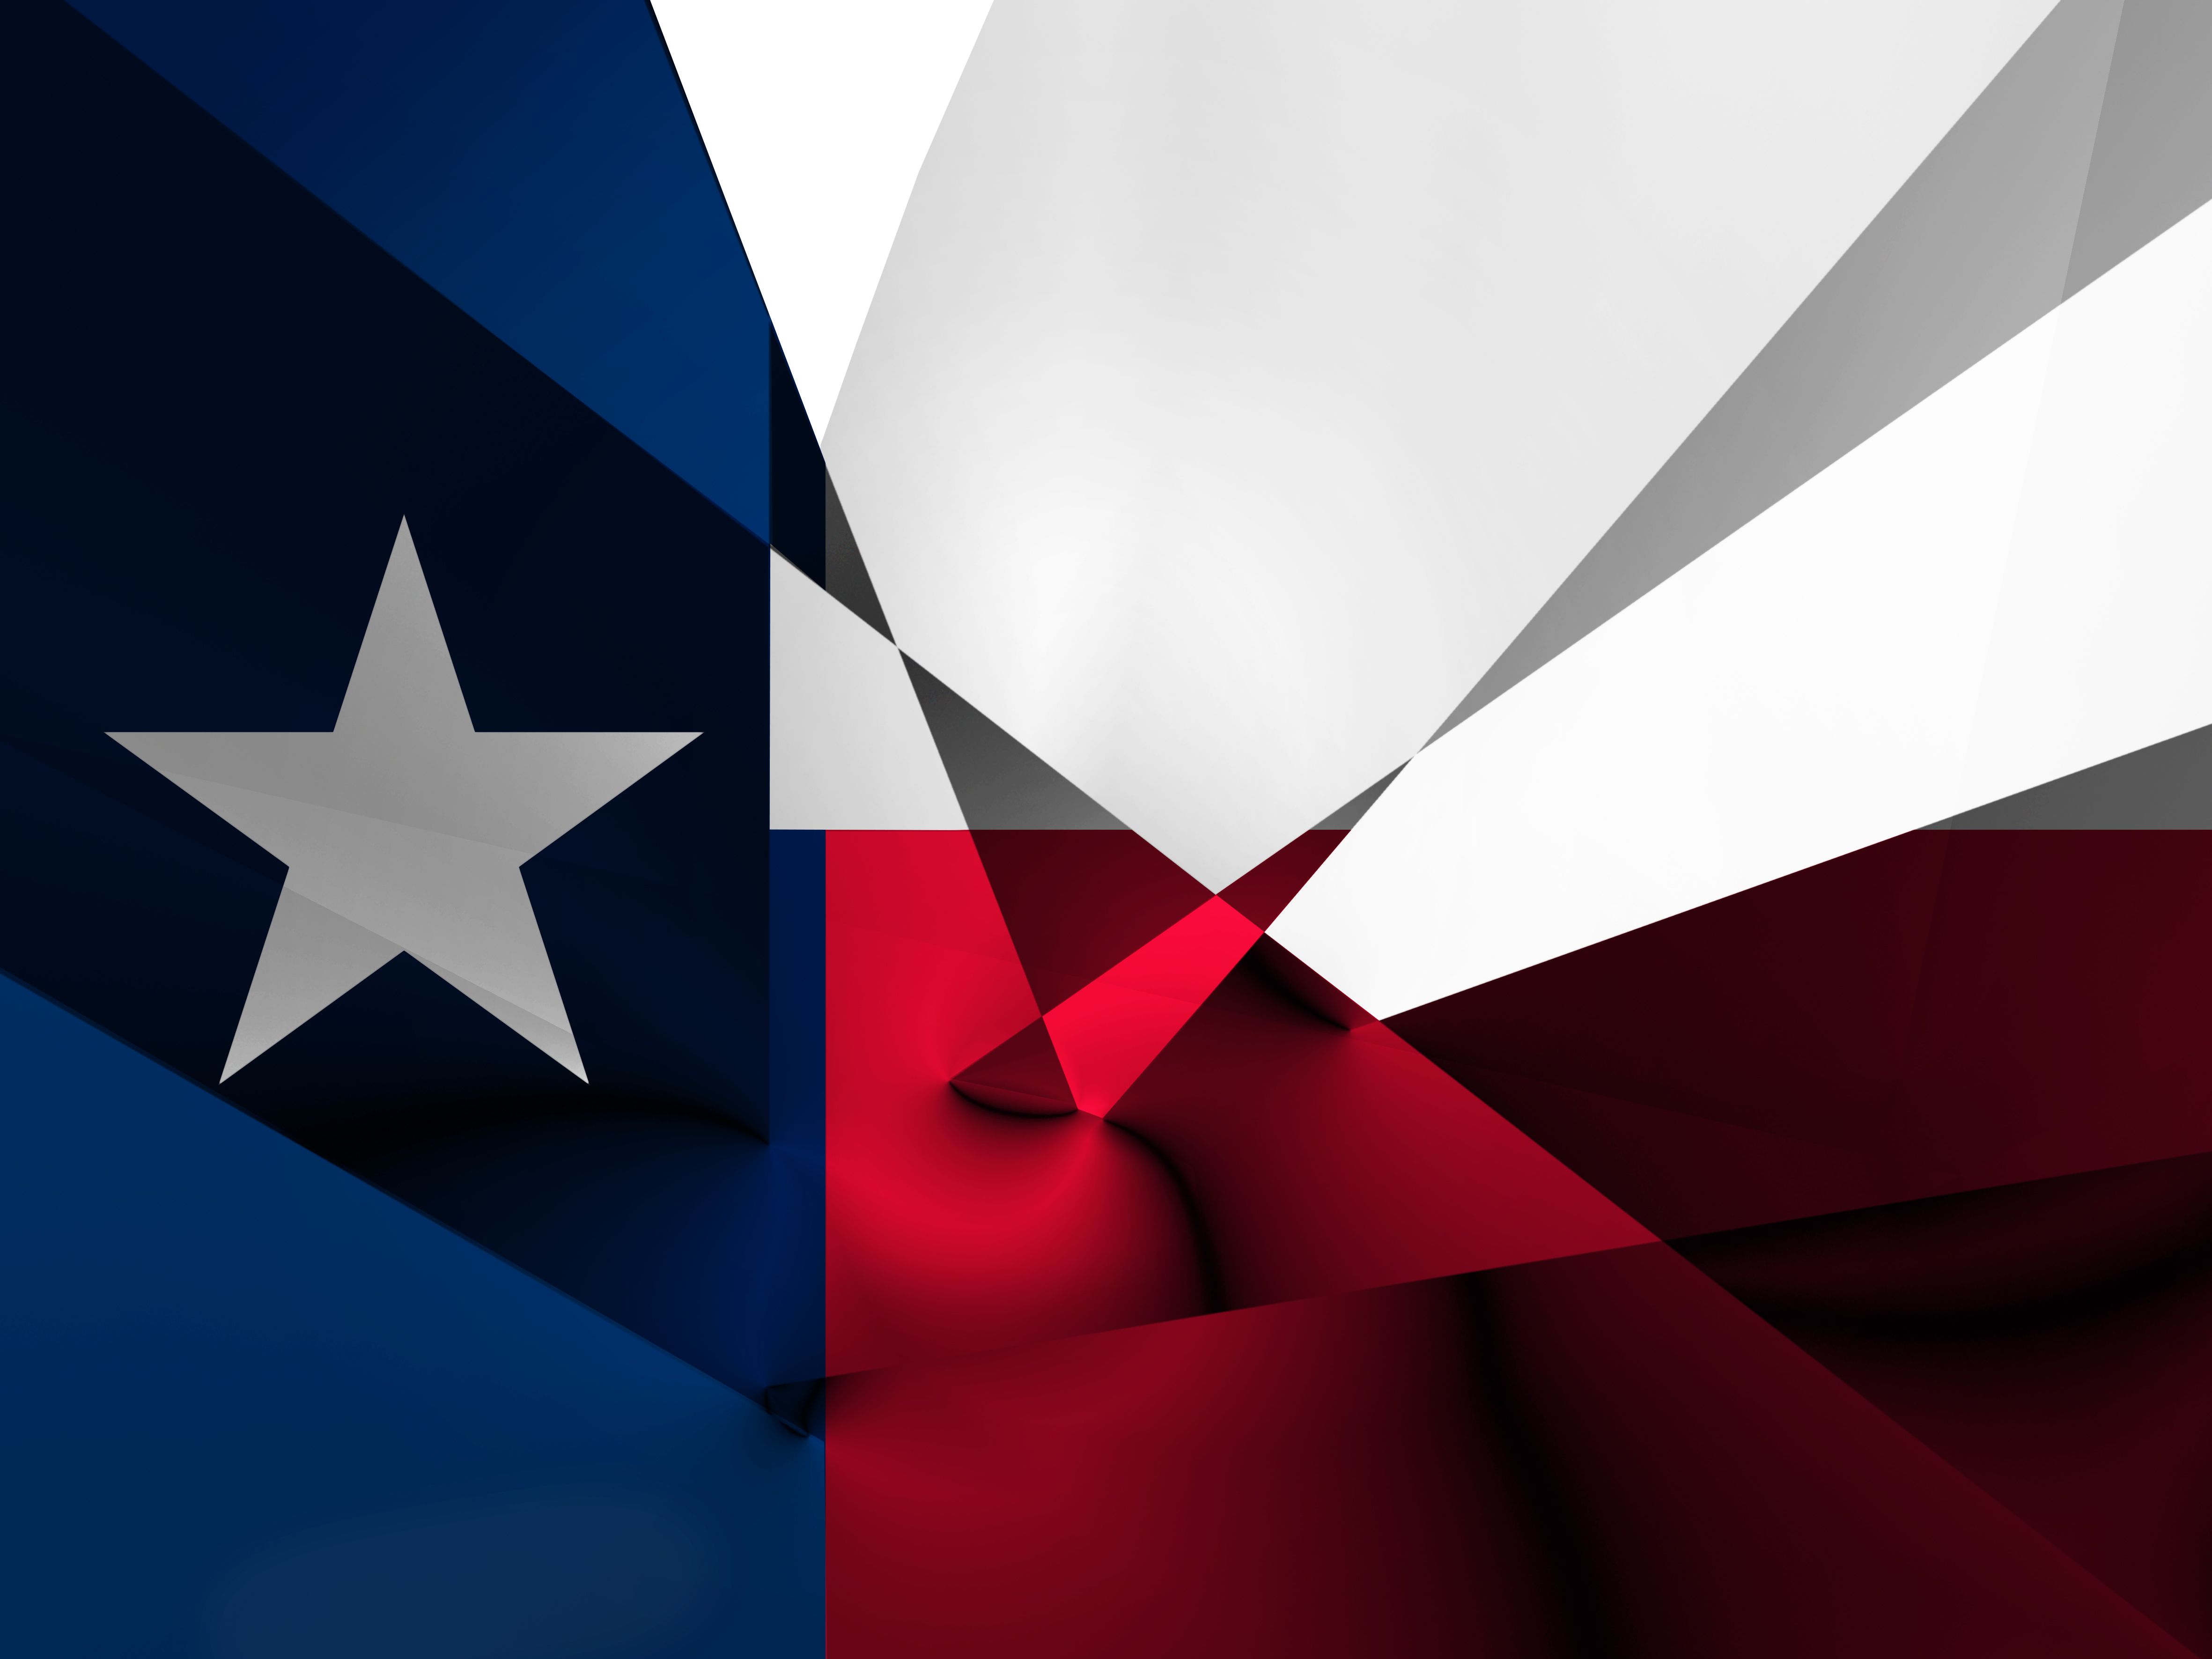 gov.texas.gov